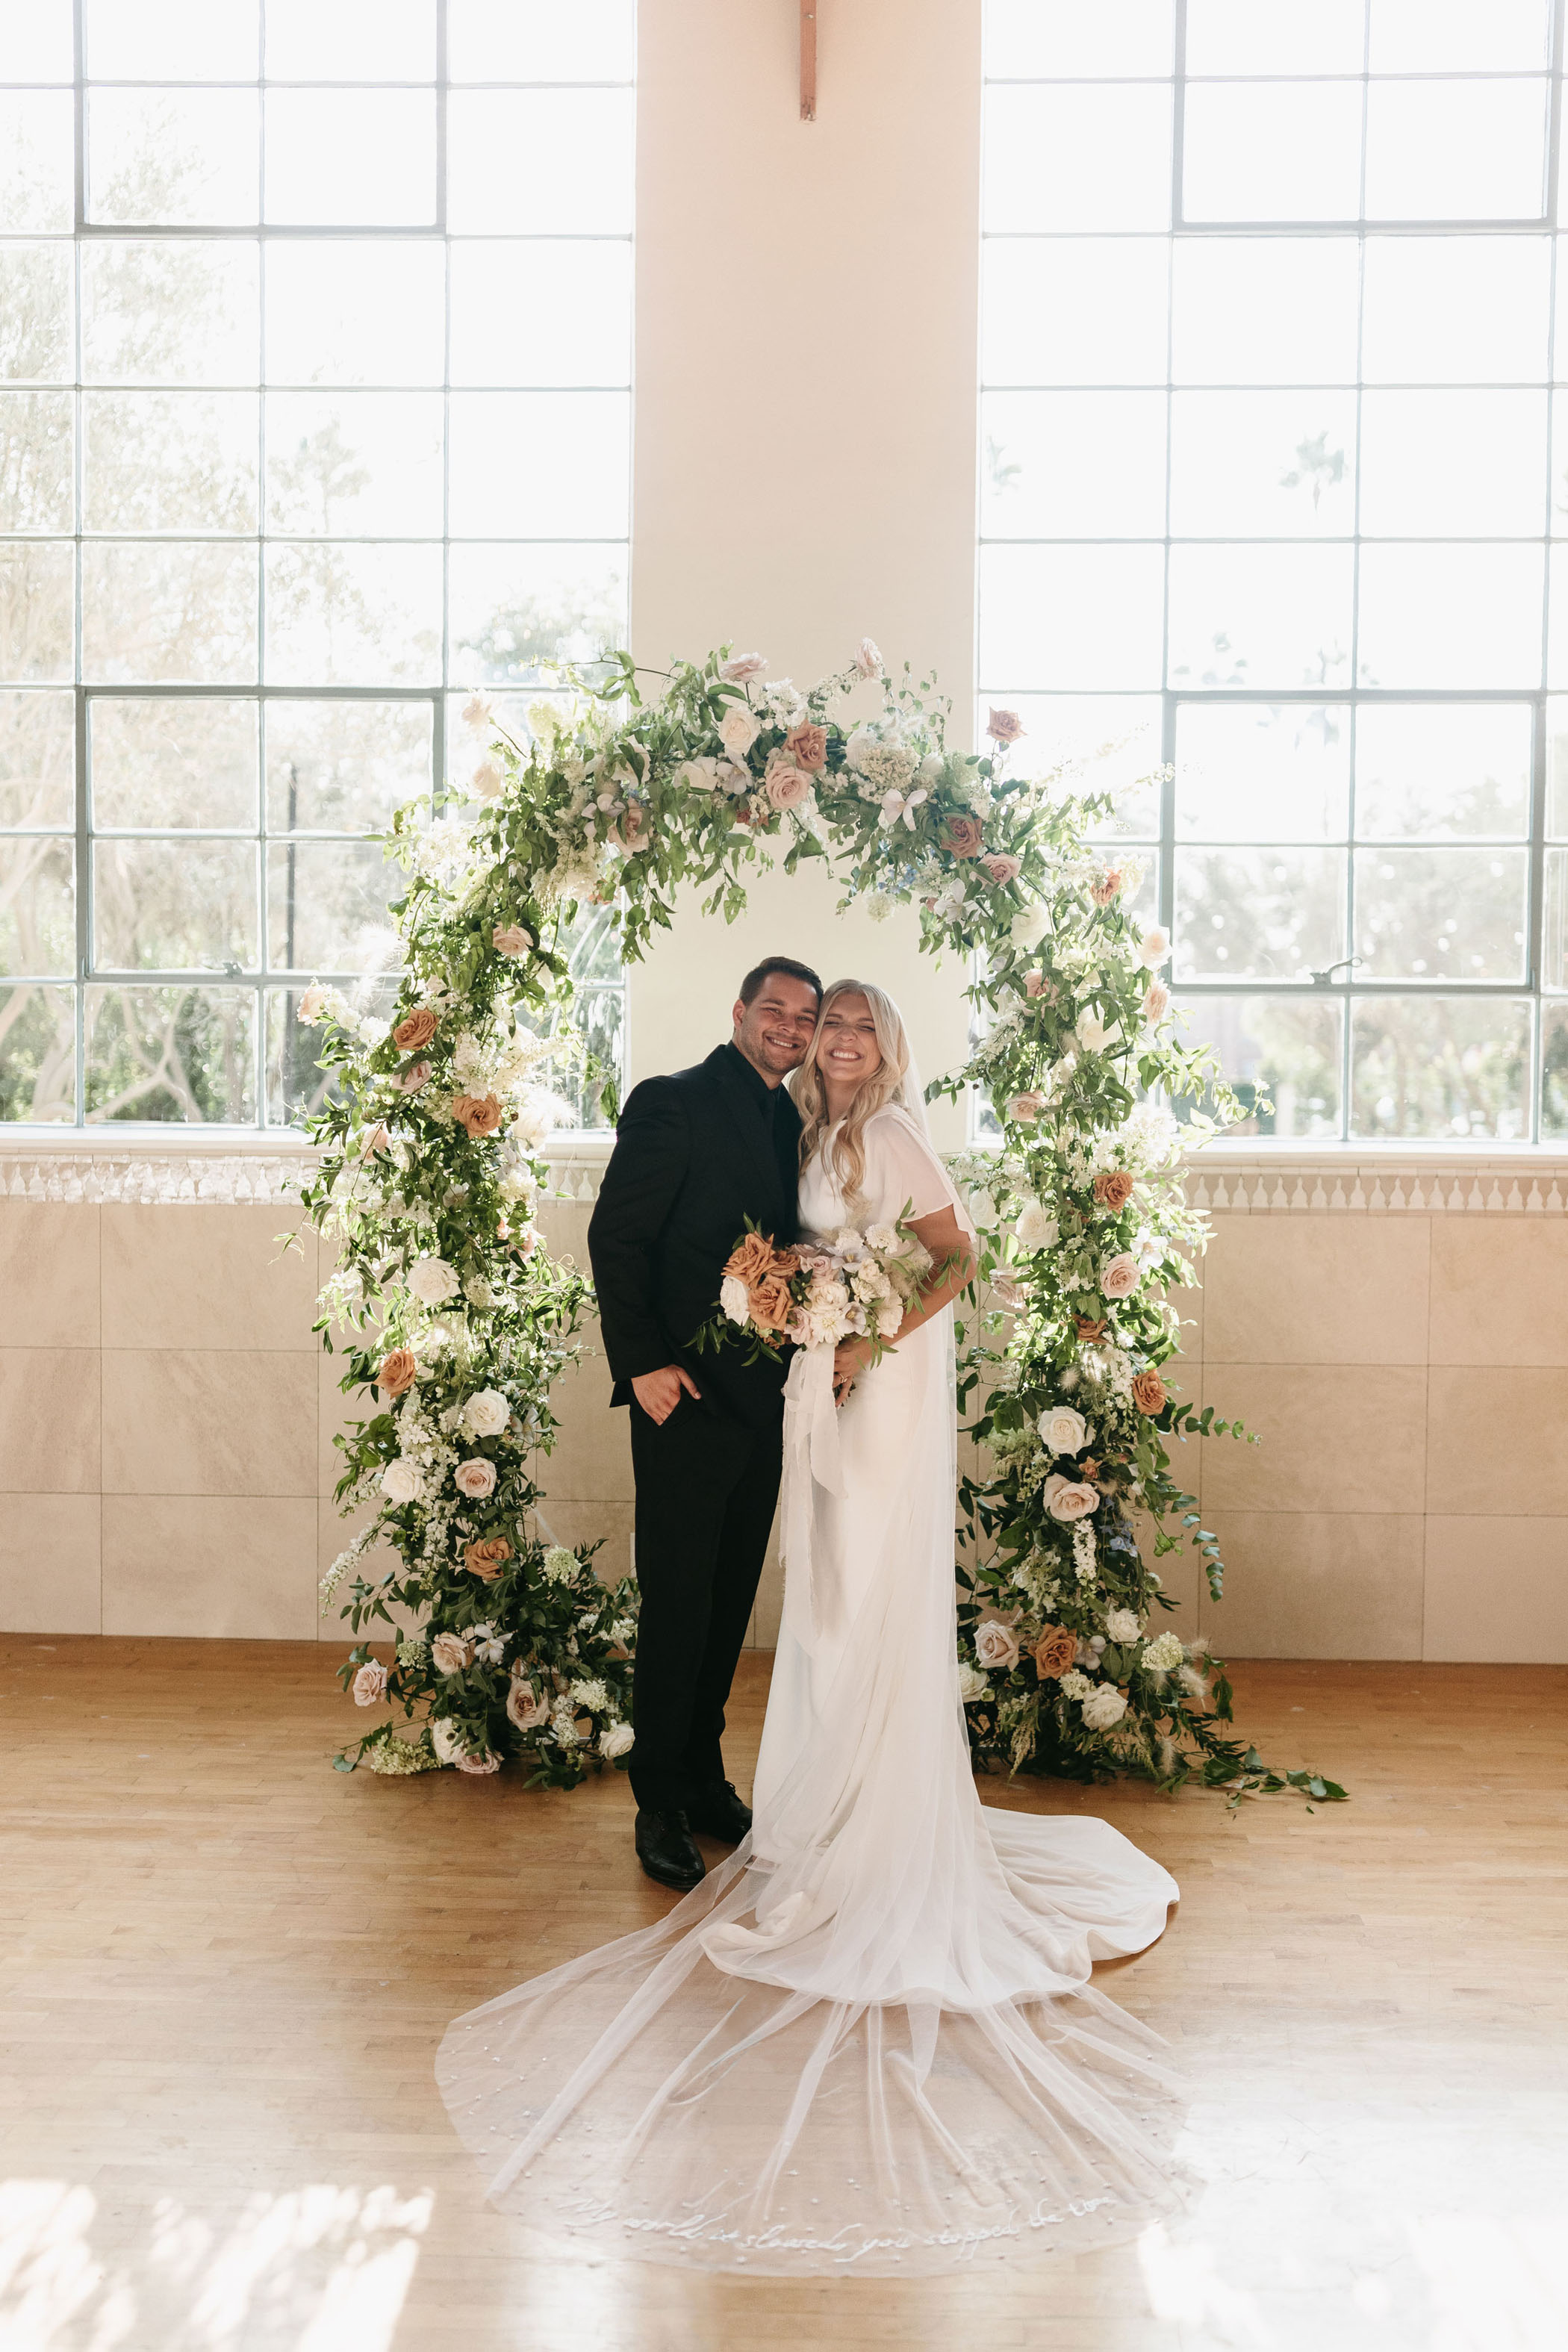 bride and groom smiling under floral ceremony arch in windowed indoor venue